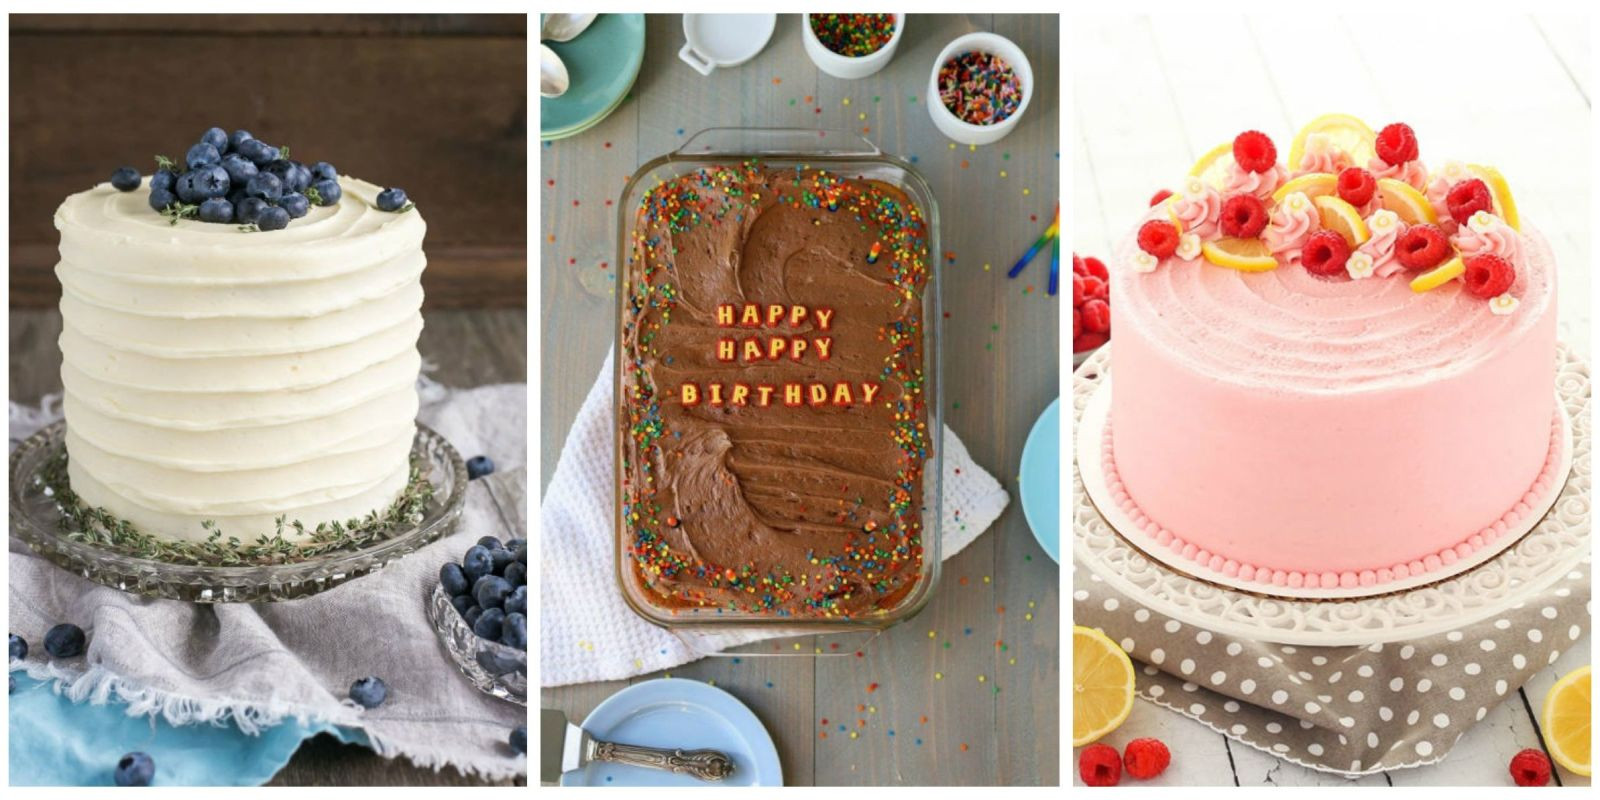 Best Homemade Birthday Cake Recipes
 22 Homemade Birthday Cake Ideas Easy Recipes for